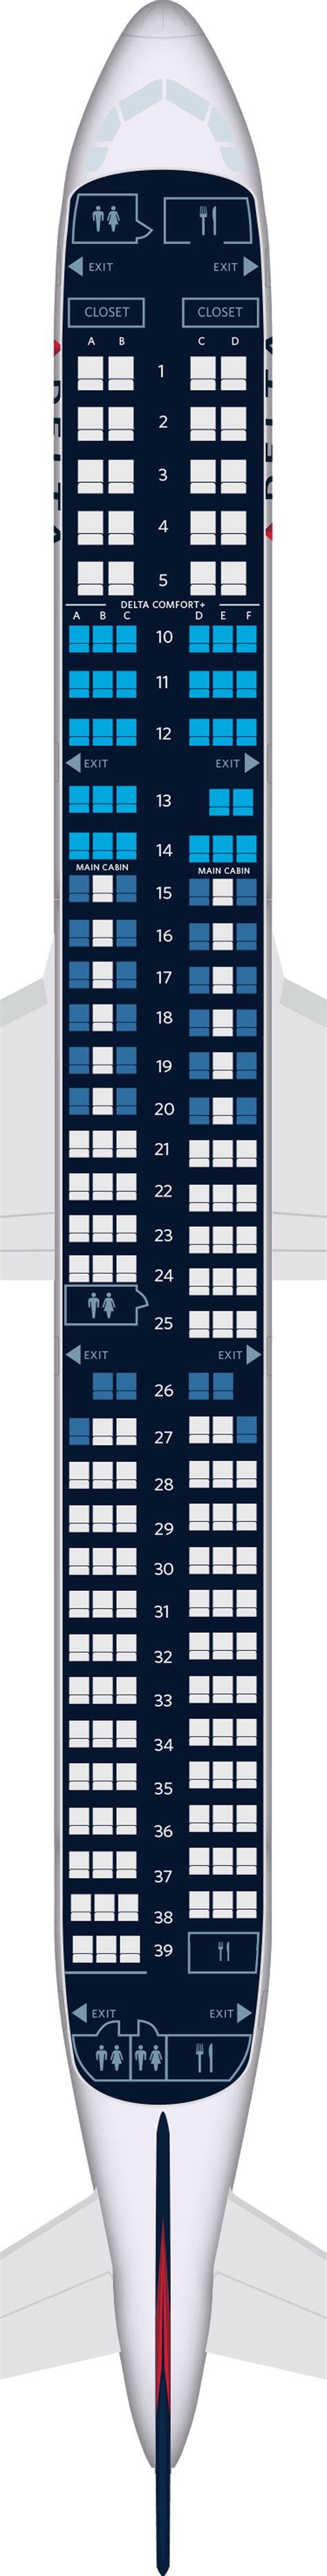 Lufthansa Airbus A Neo Seat Map Image To U